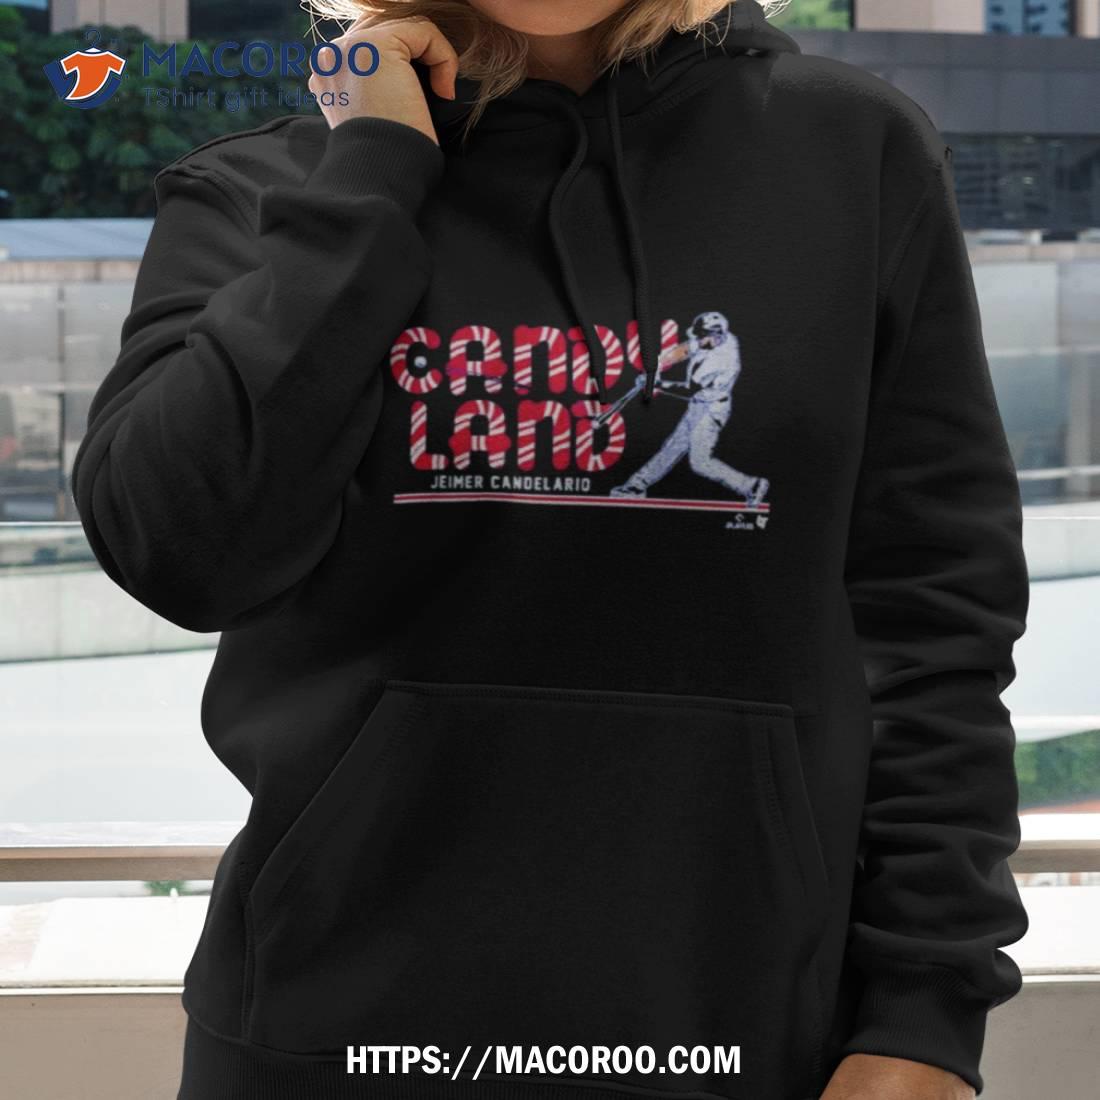 Jeimer Candelario Candy Land Shirt - Chicago Cubs - Skullridding